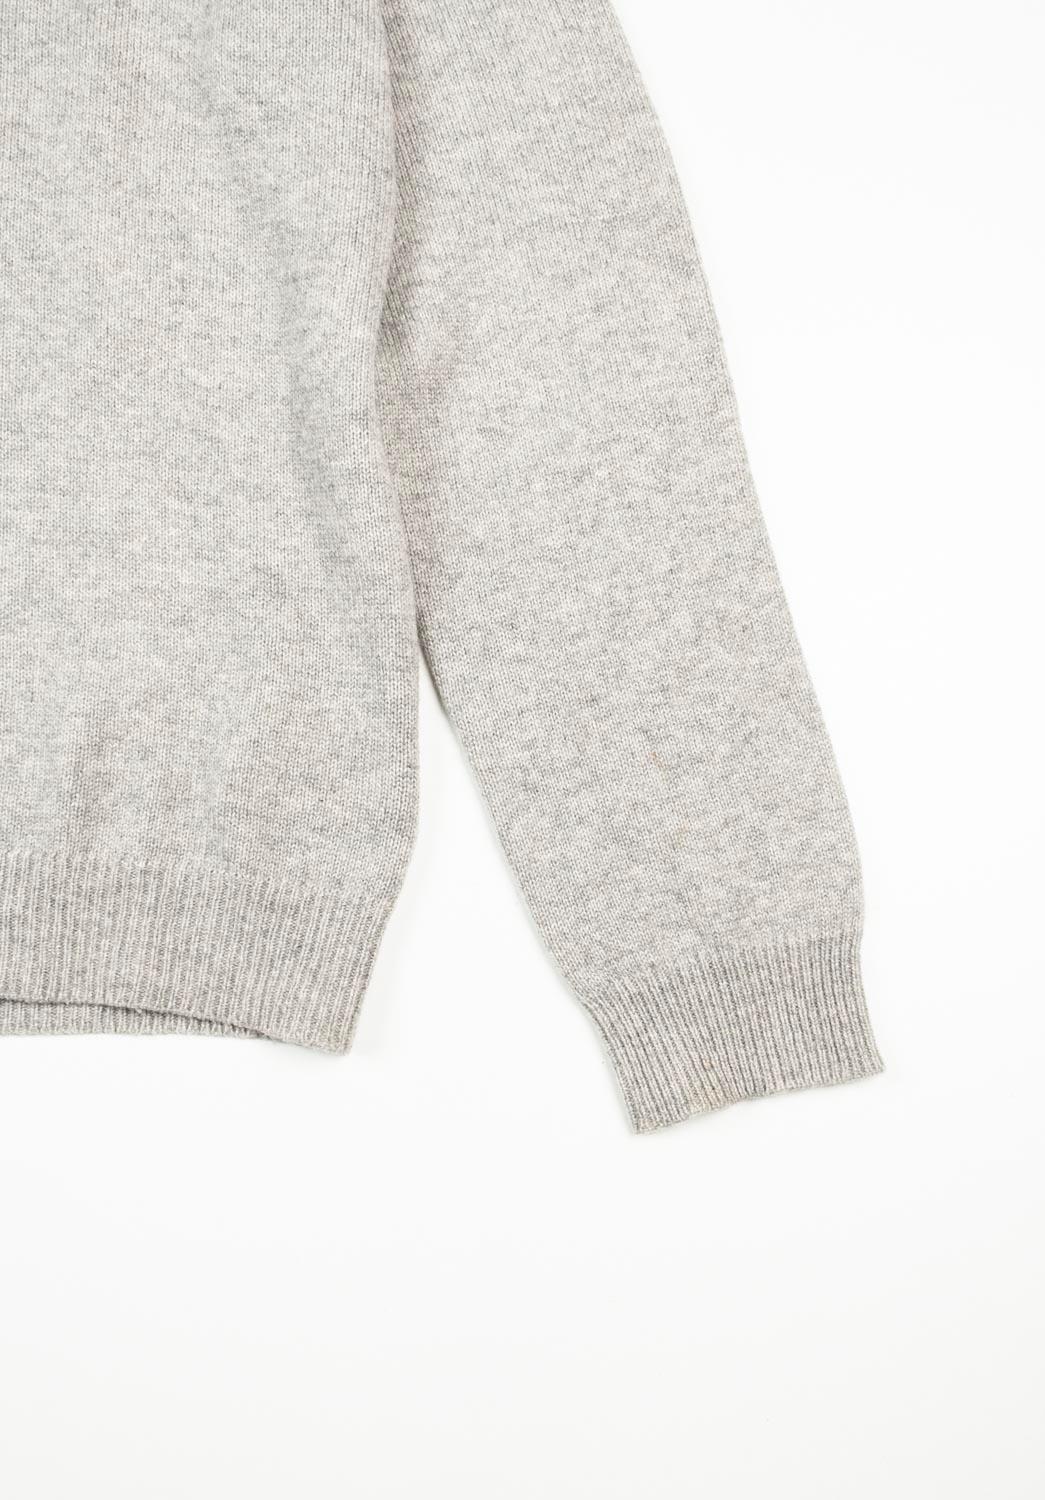 Men's Prada Men Sweater Cashmere V Neck Size ITA52 (L), S687 For Sale